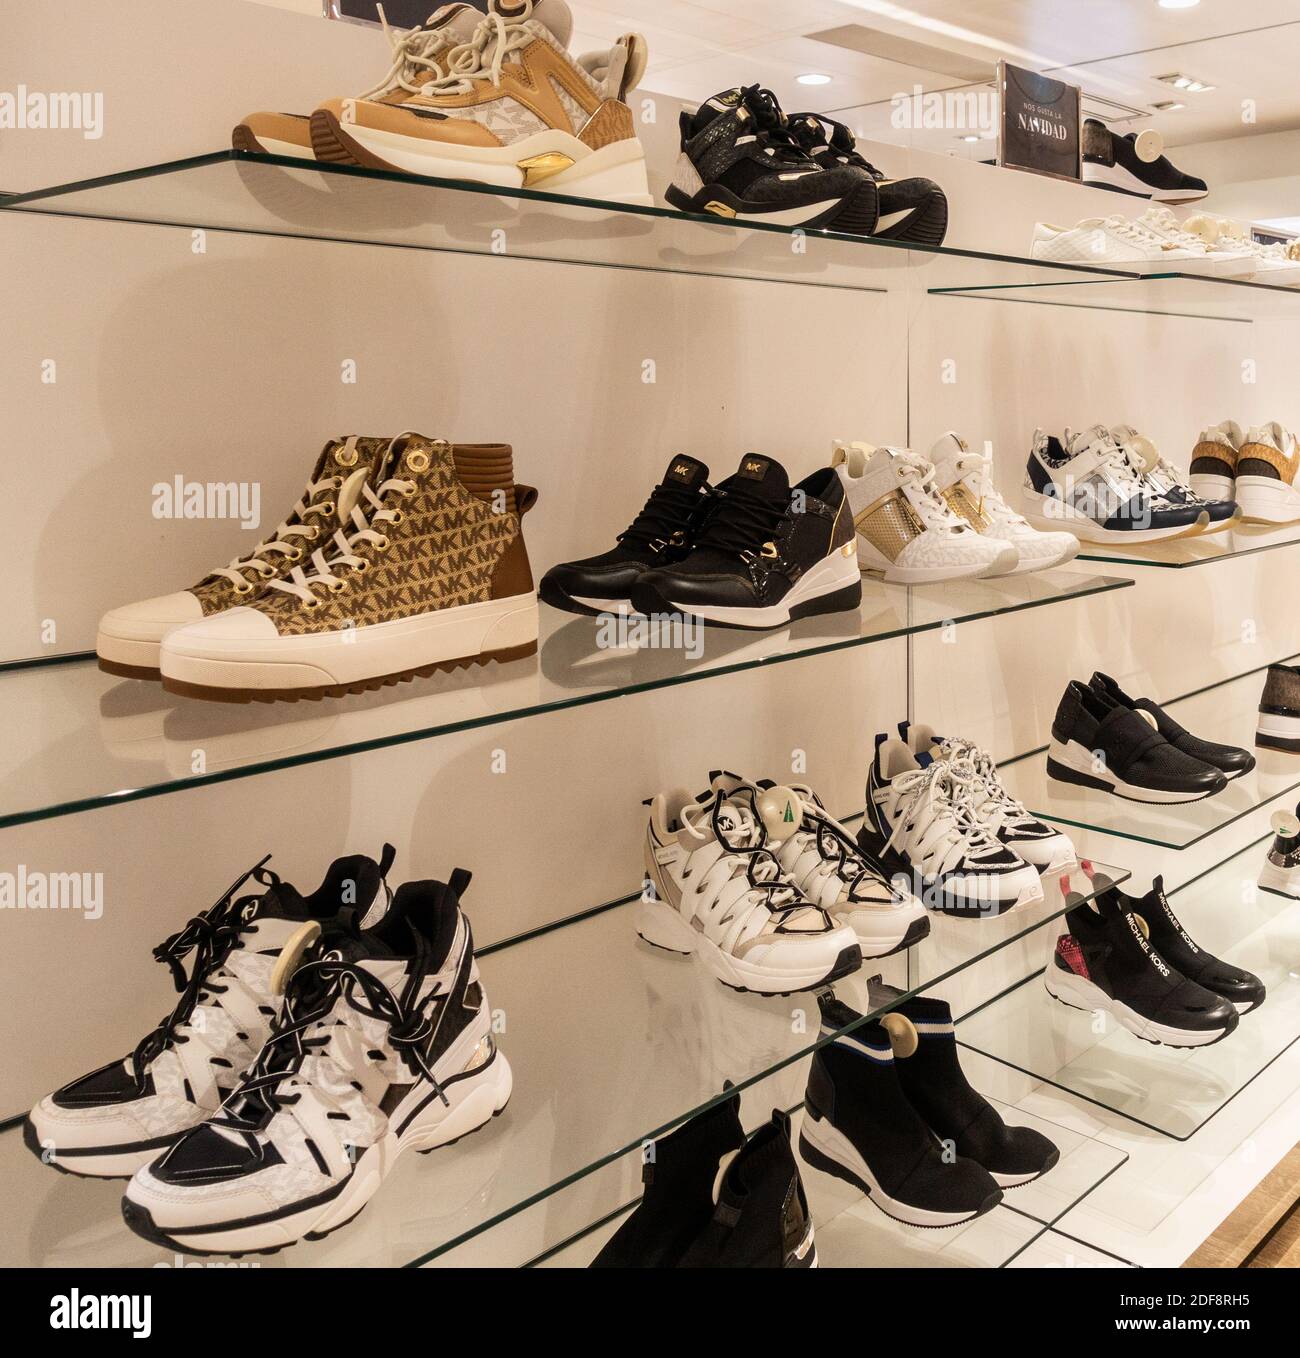 Michael Kors shoes, footwear display Stock Photo - Alamy